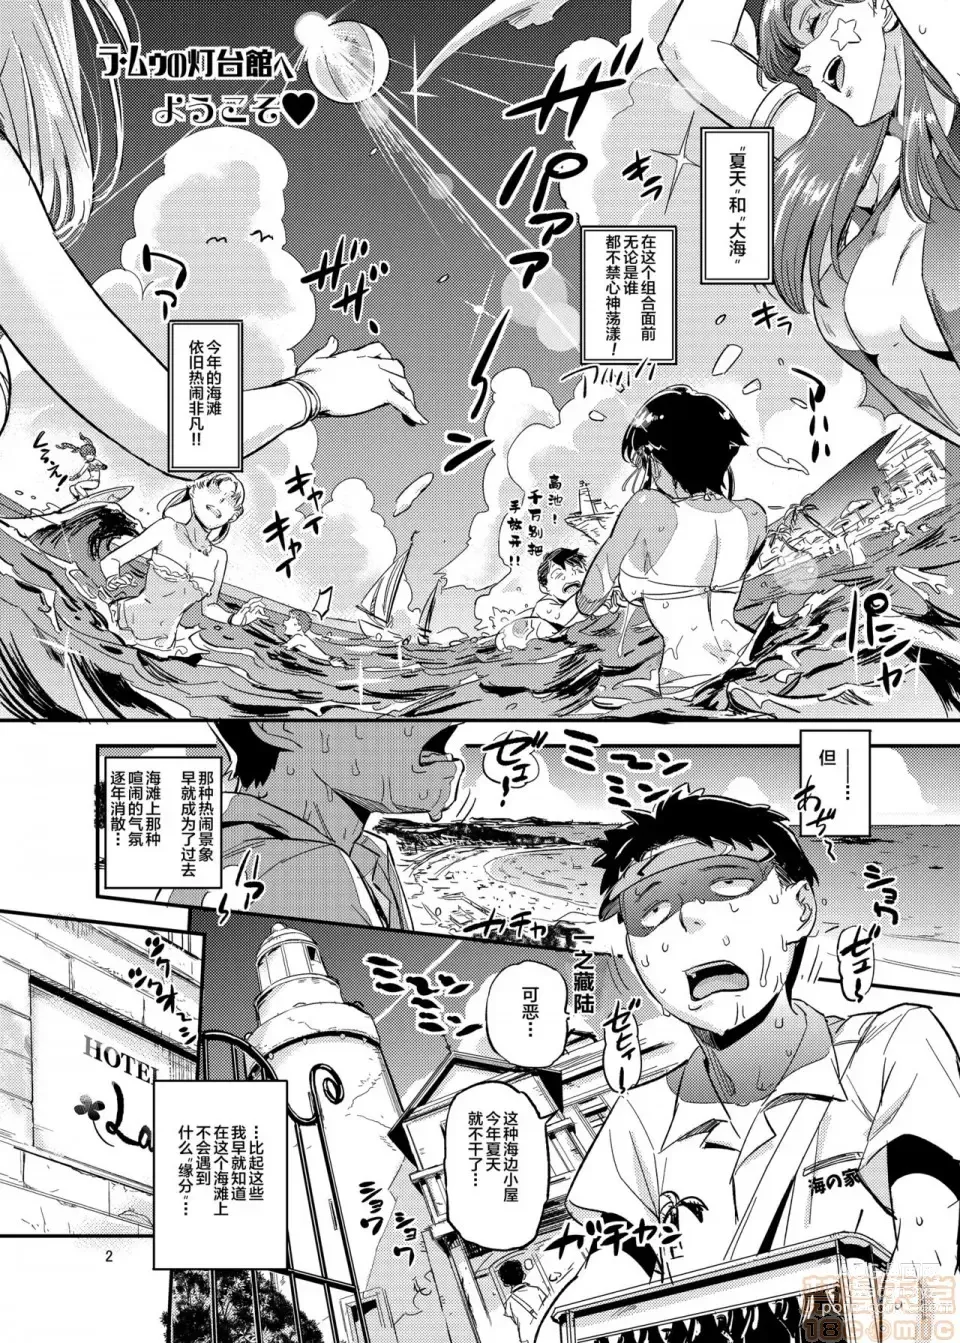 Page 4 of doujinshi 1